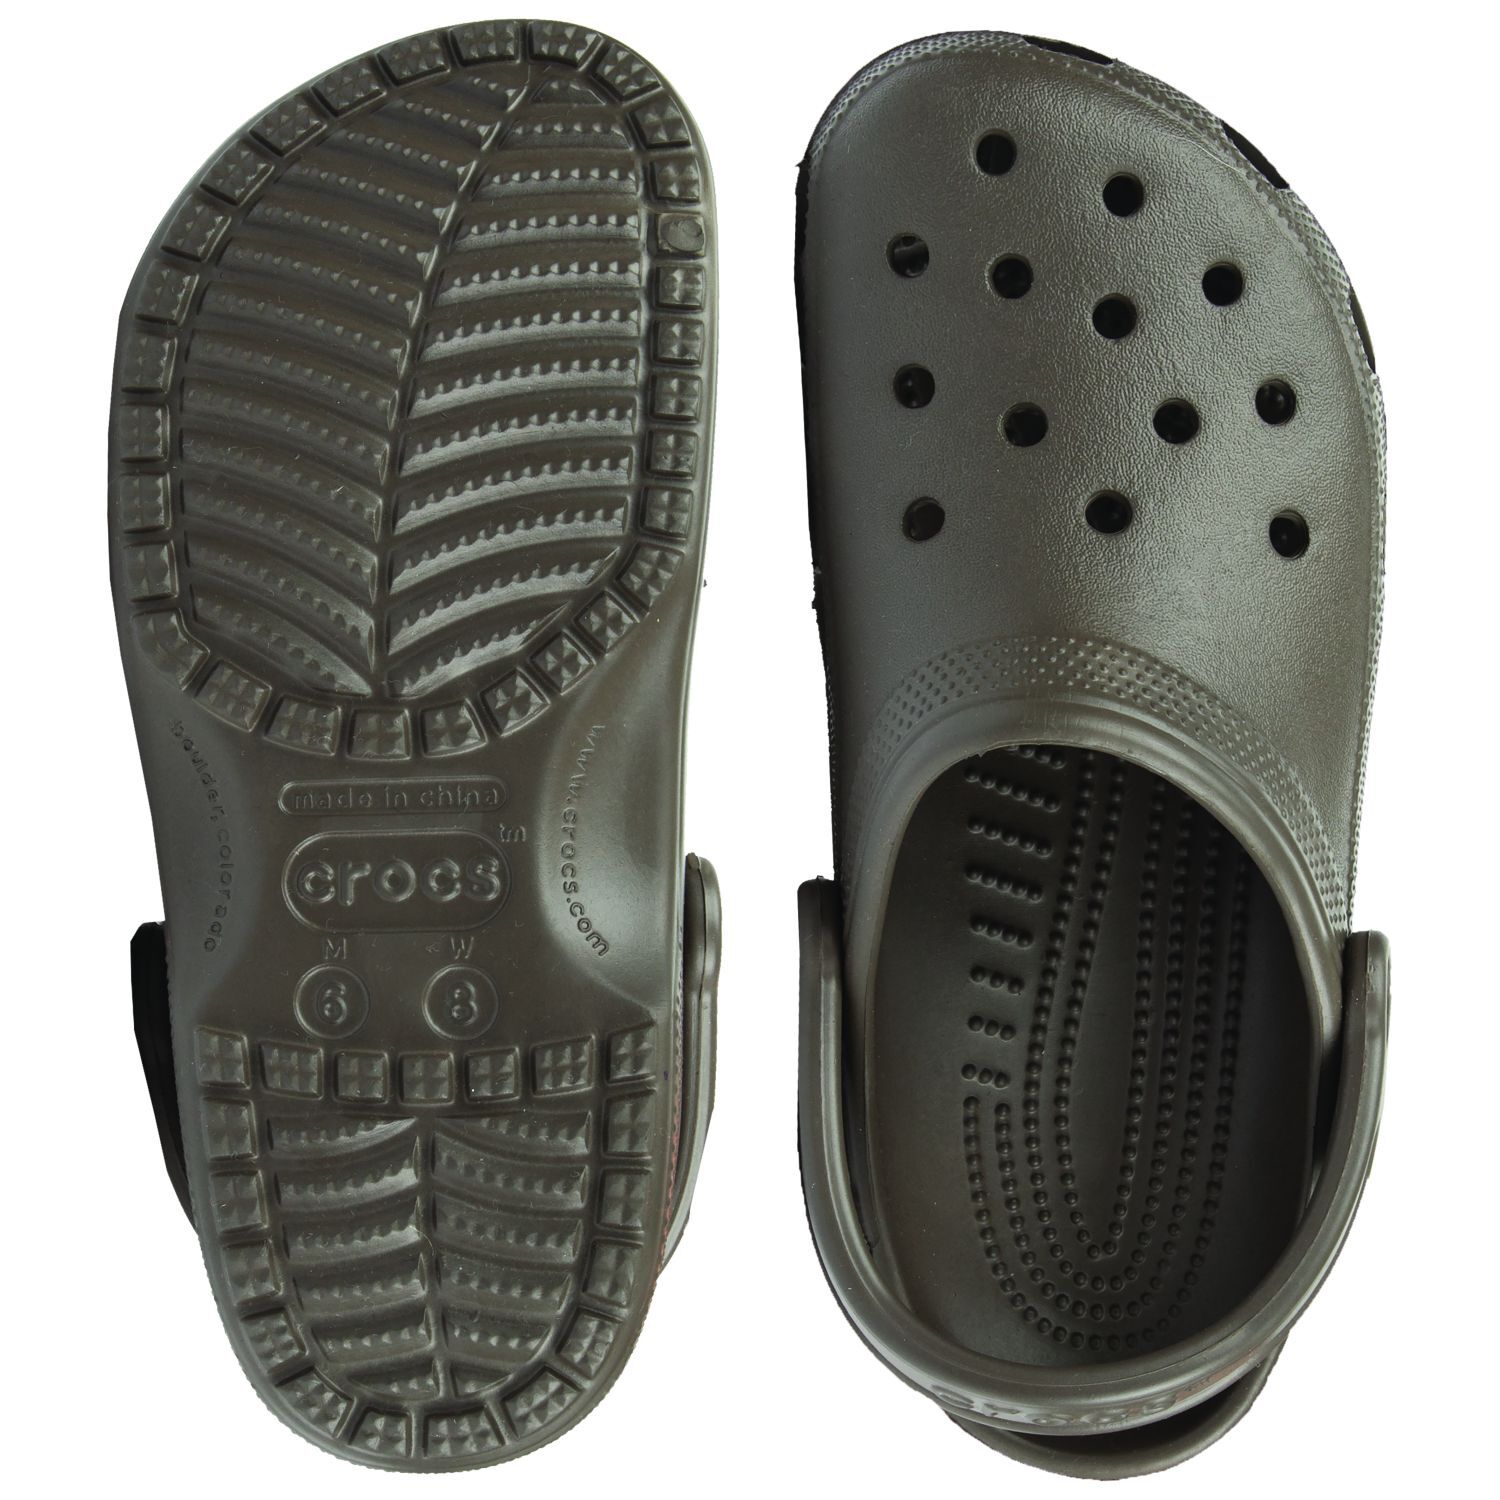 crocs classic sandal mens